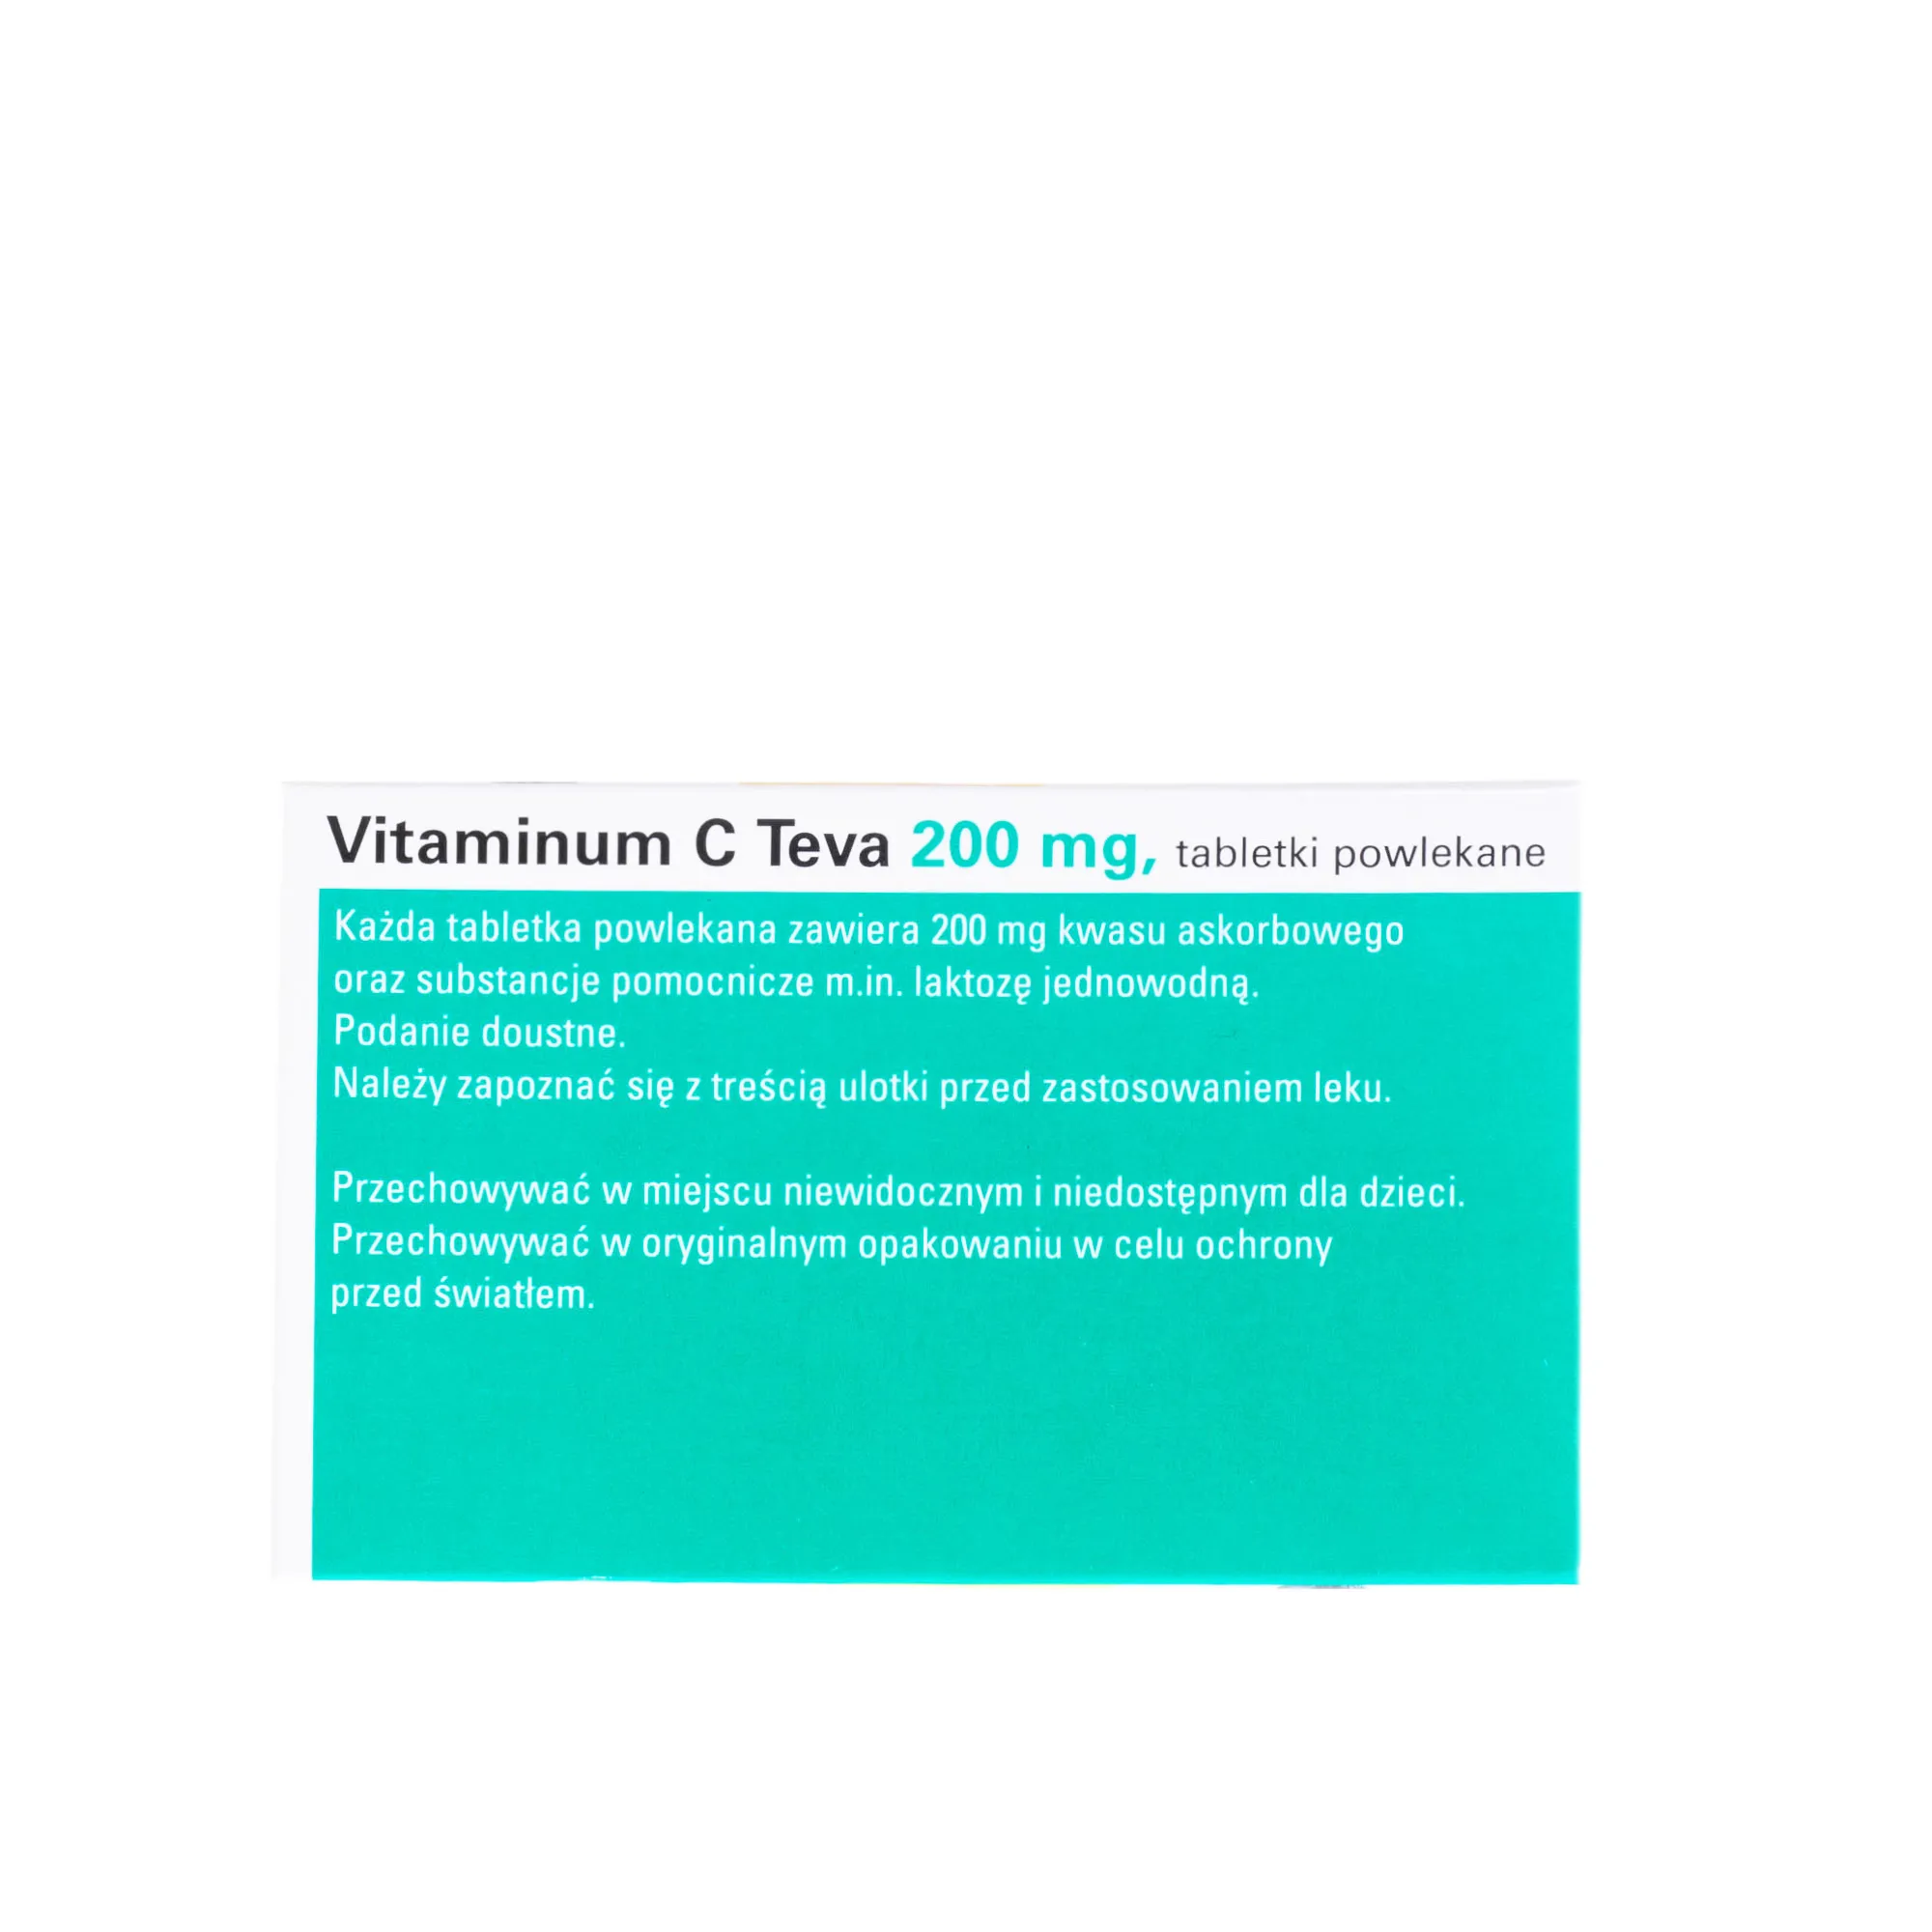 Vitaminum C Teva, 200 mg, 50 tabletek powlekanych 